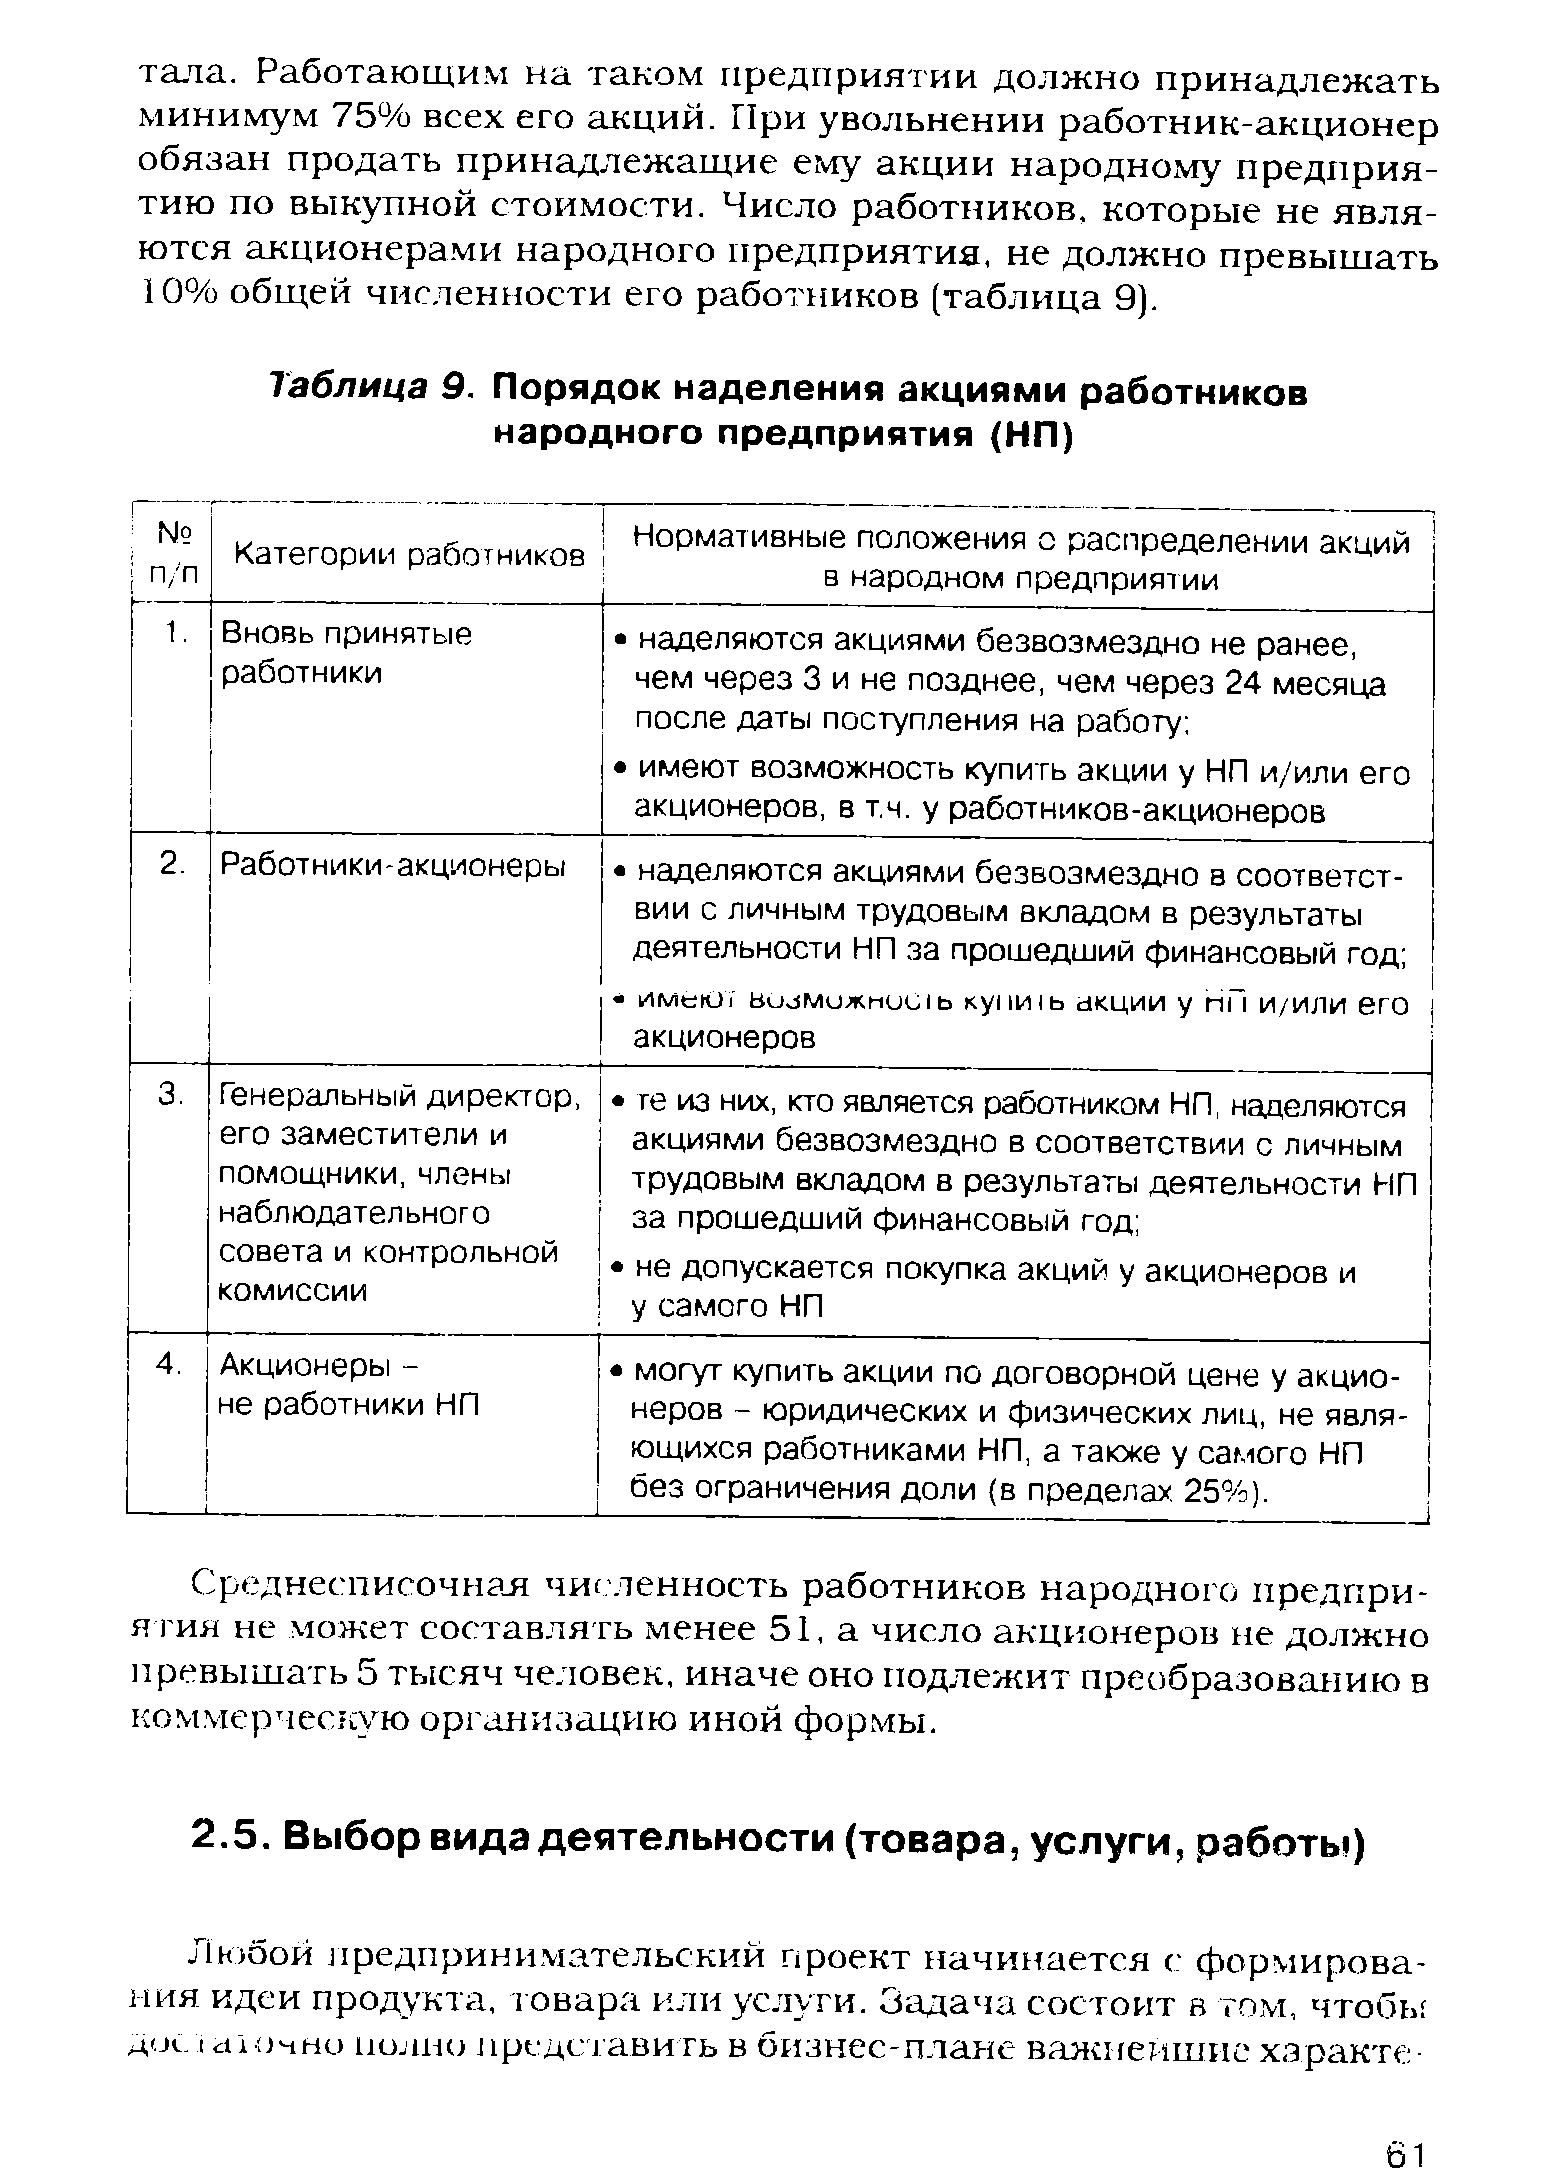 Таблица 9. Порядок наделения акциями работников народного предприятия (НП)
